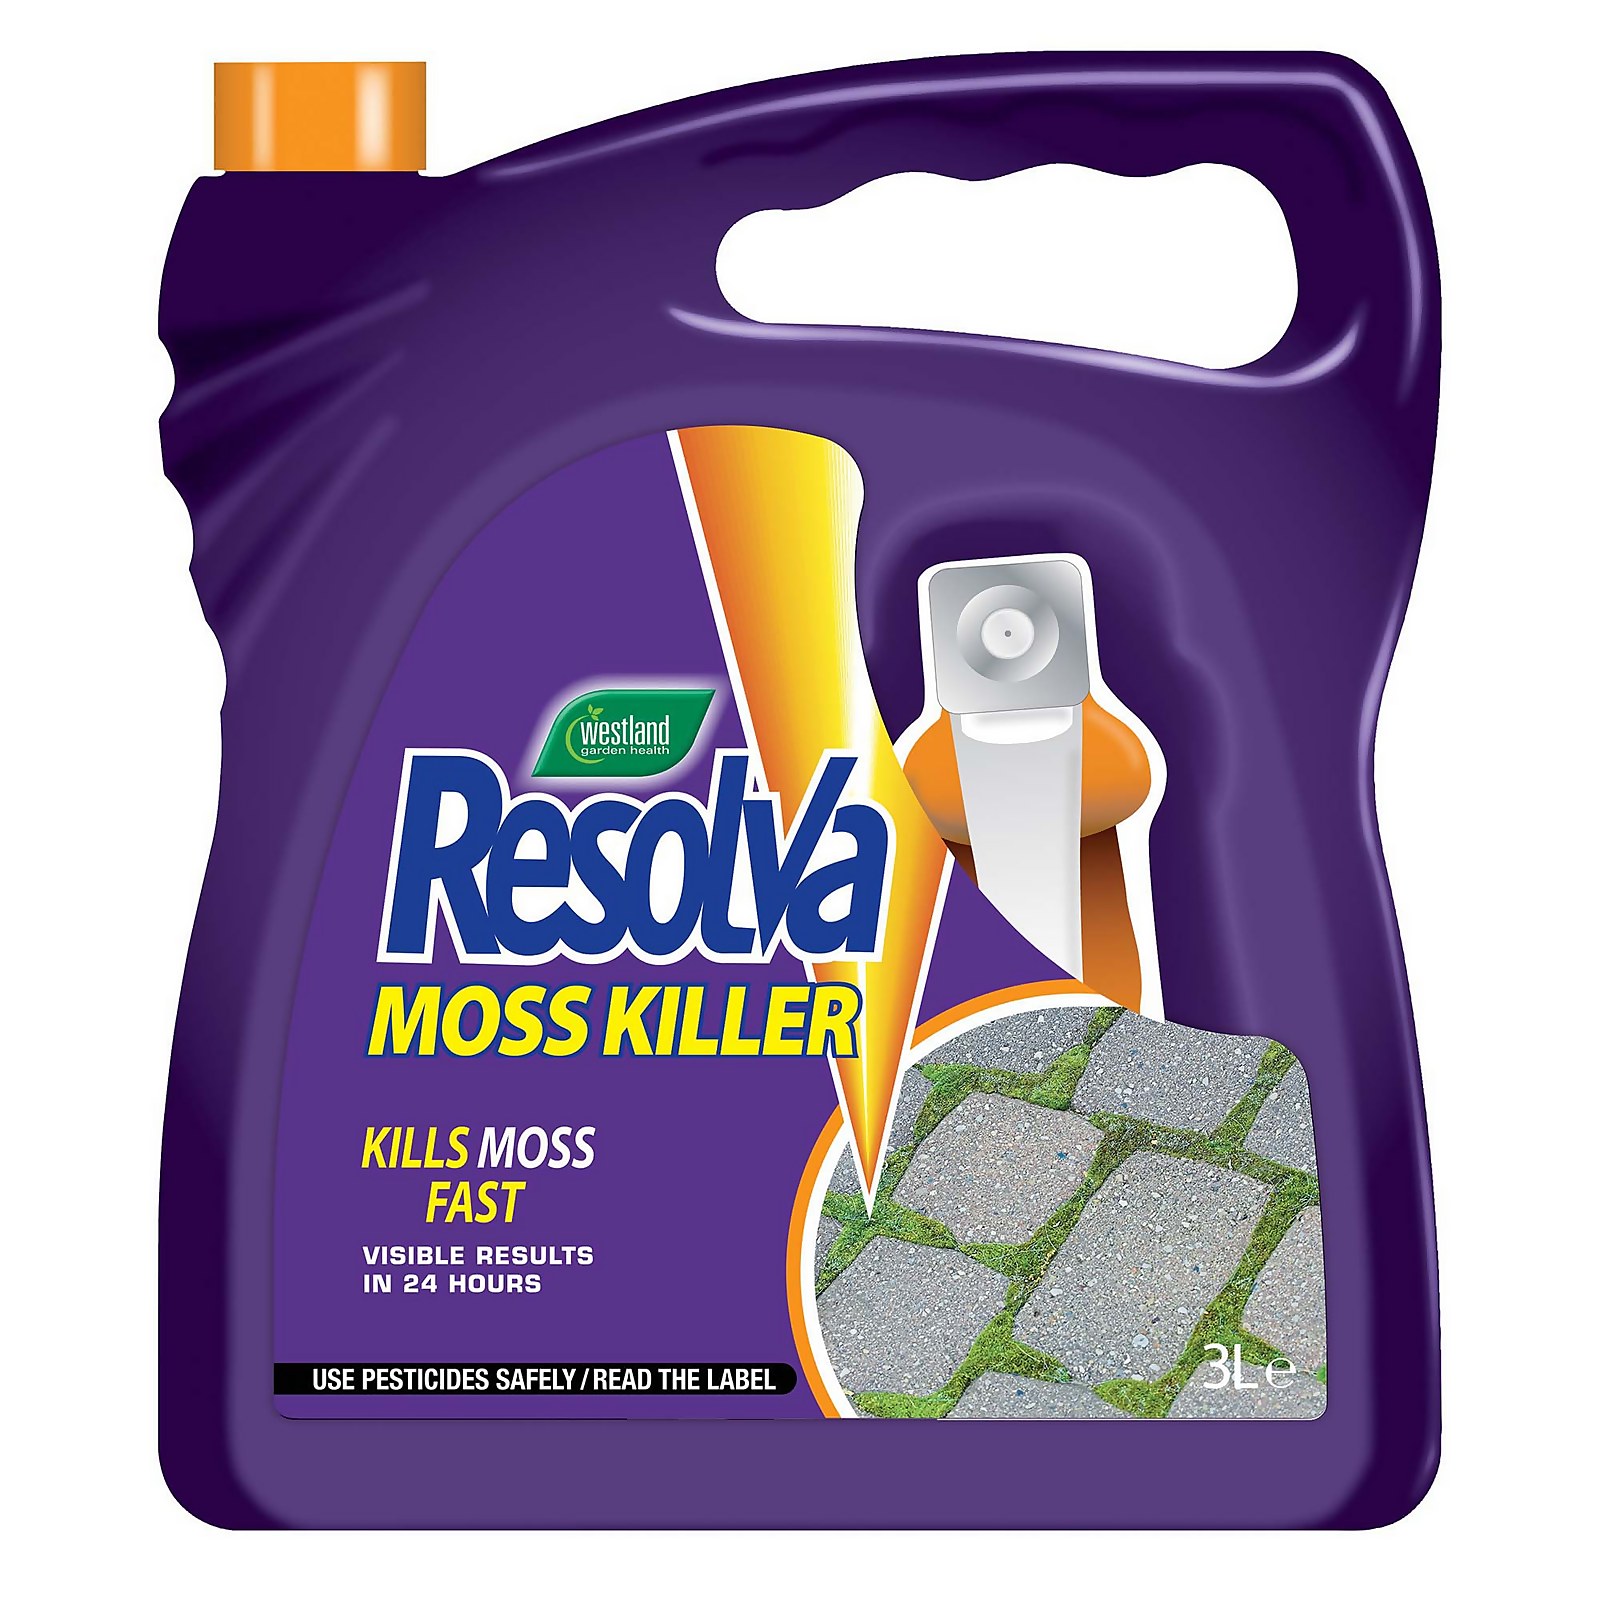 Photo of Resolva Moss Killer - 3l